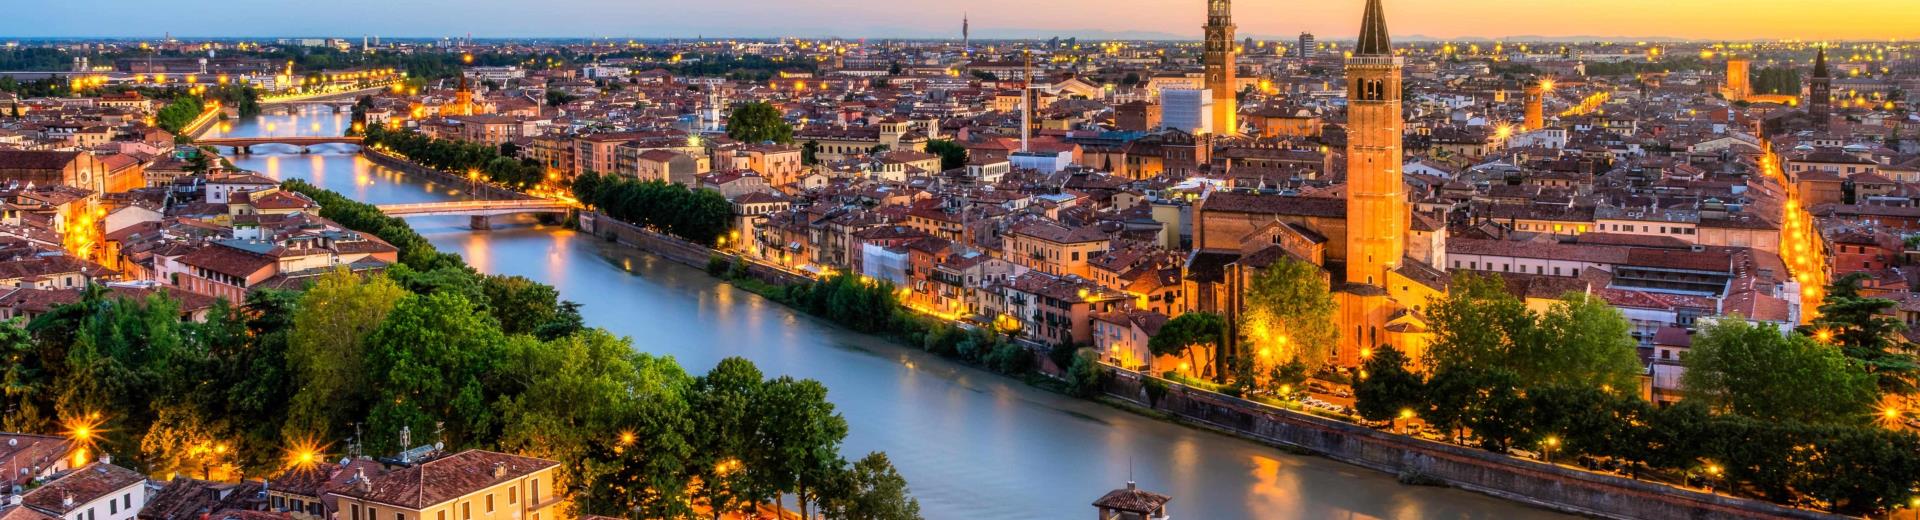 Verona Travel Guide - Best Western CTC Hotel Verona